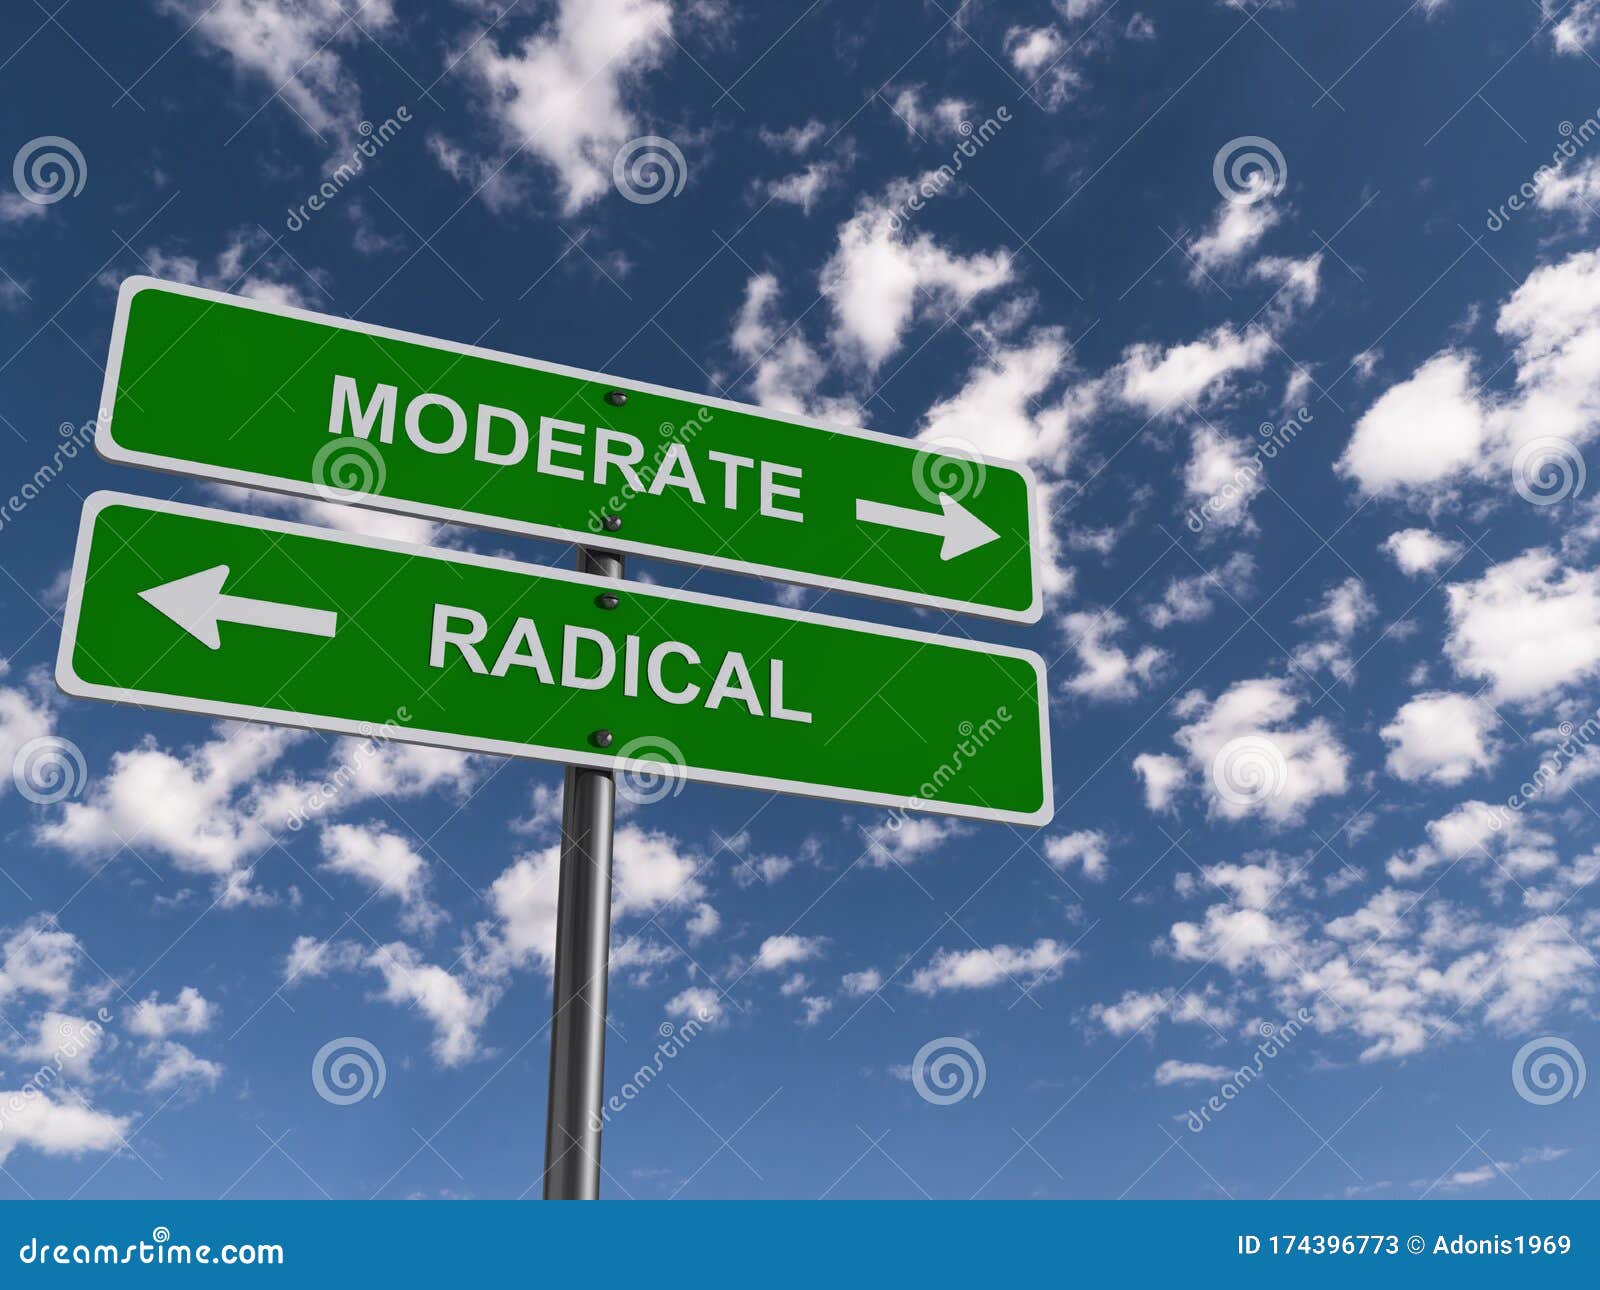 moderate radical traffic sign